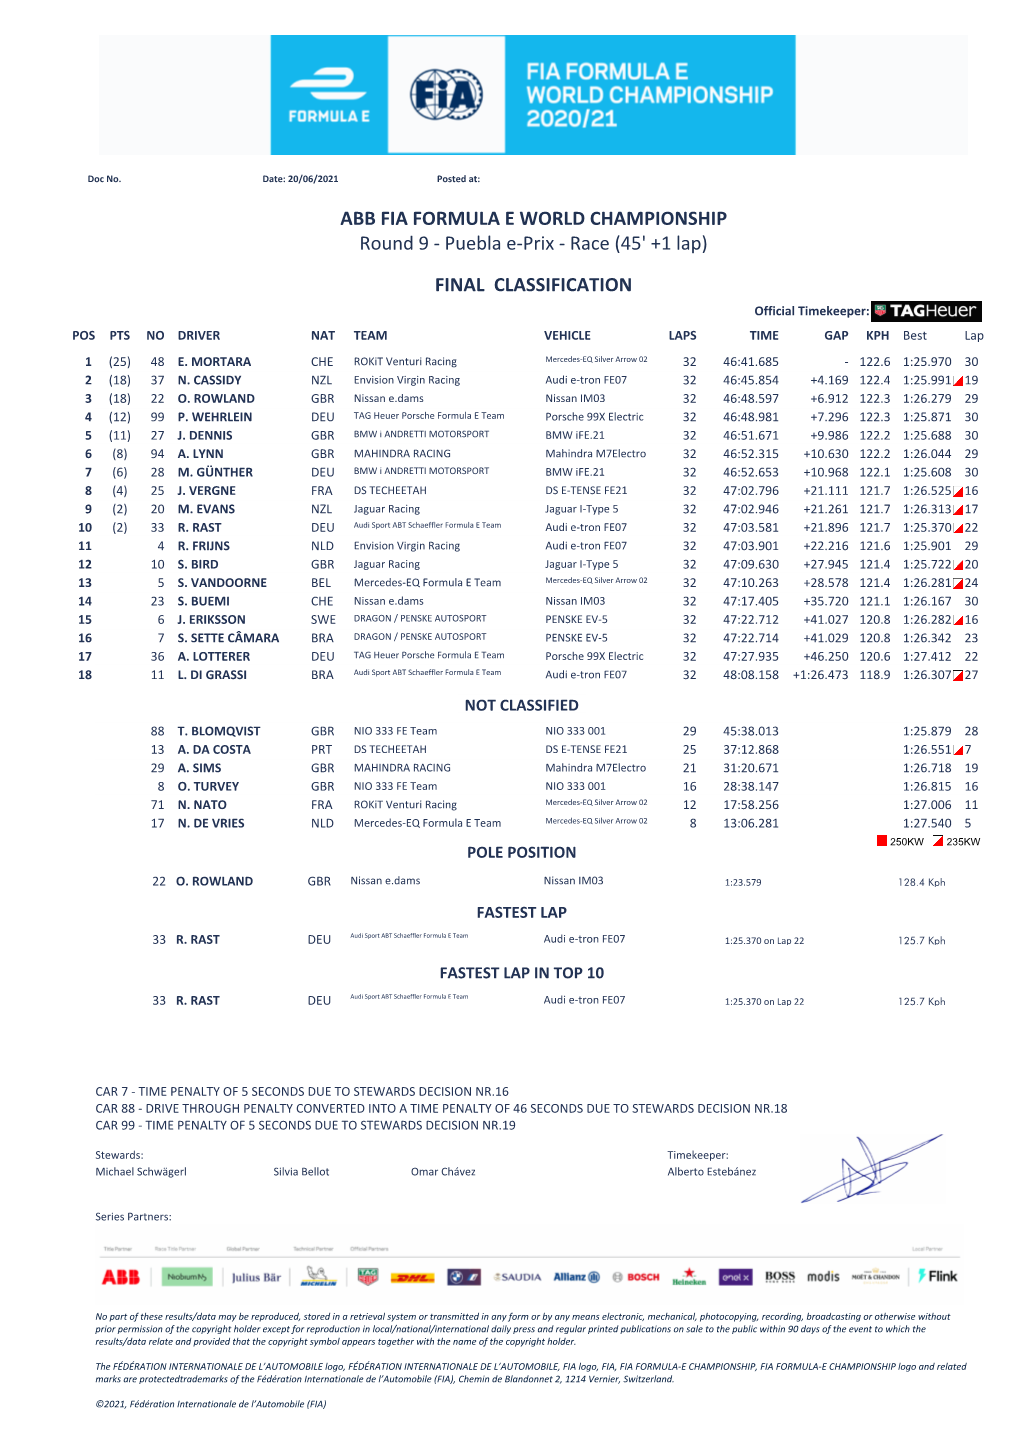 ABB FIA FORMULA E WORLD CHAMPIONSHIP Round 9 - Puebla E-Prix - Race (45' +1 Lap)